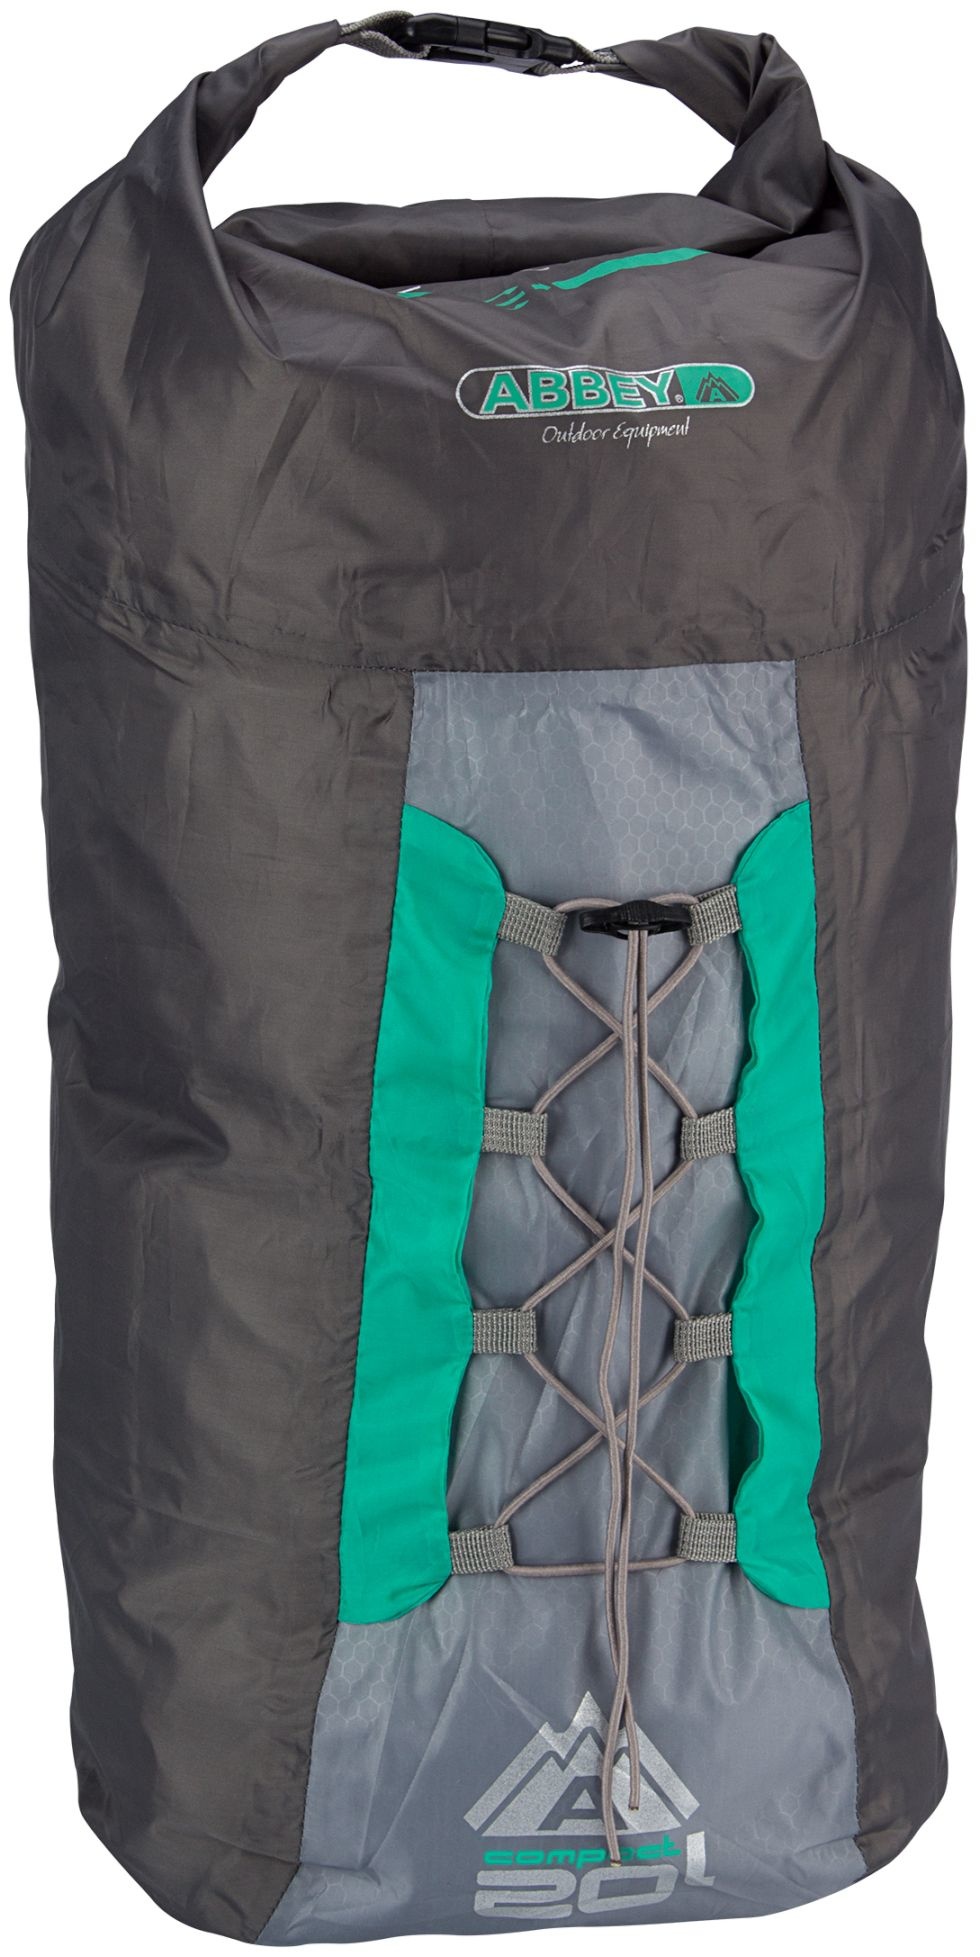 Abbey Camp® Abbey Camp® - Compacte Rugzak All Weather - Bag in a Sac 20L - AGG